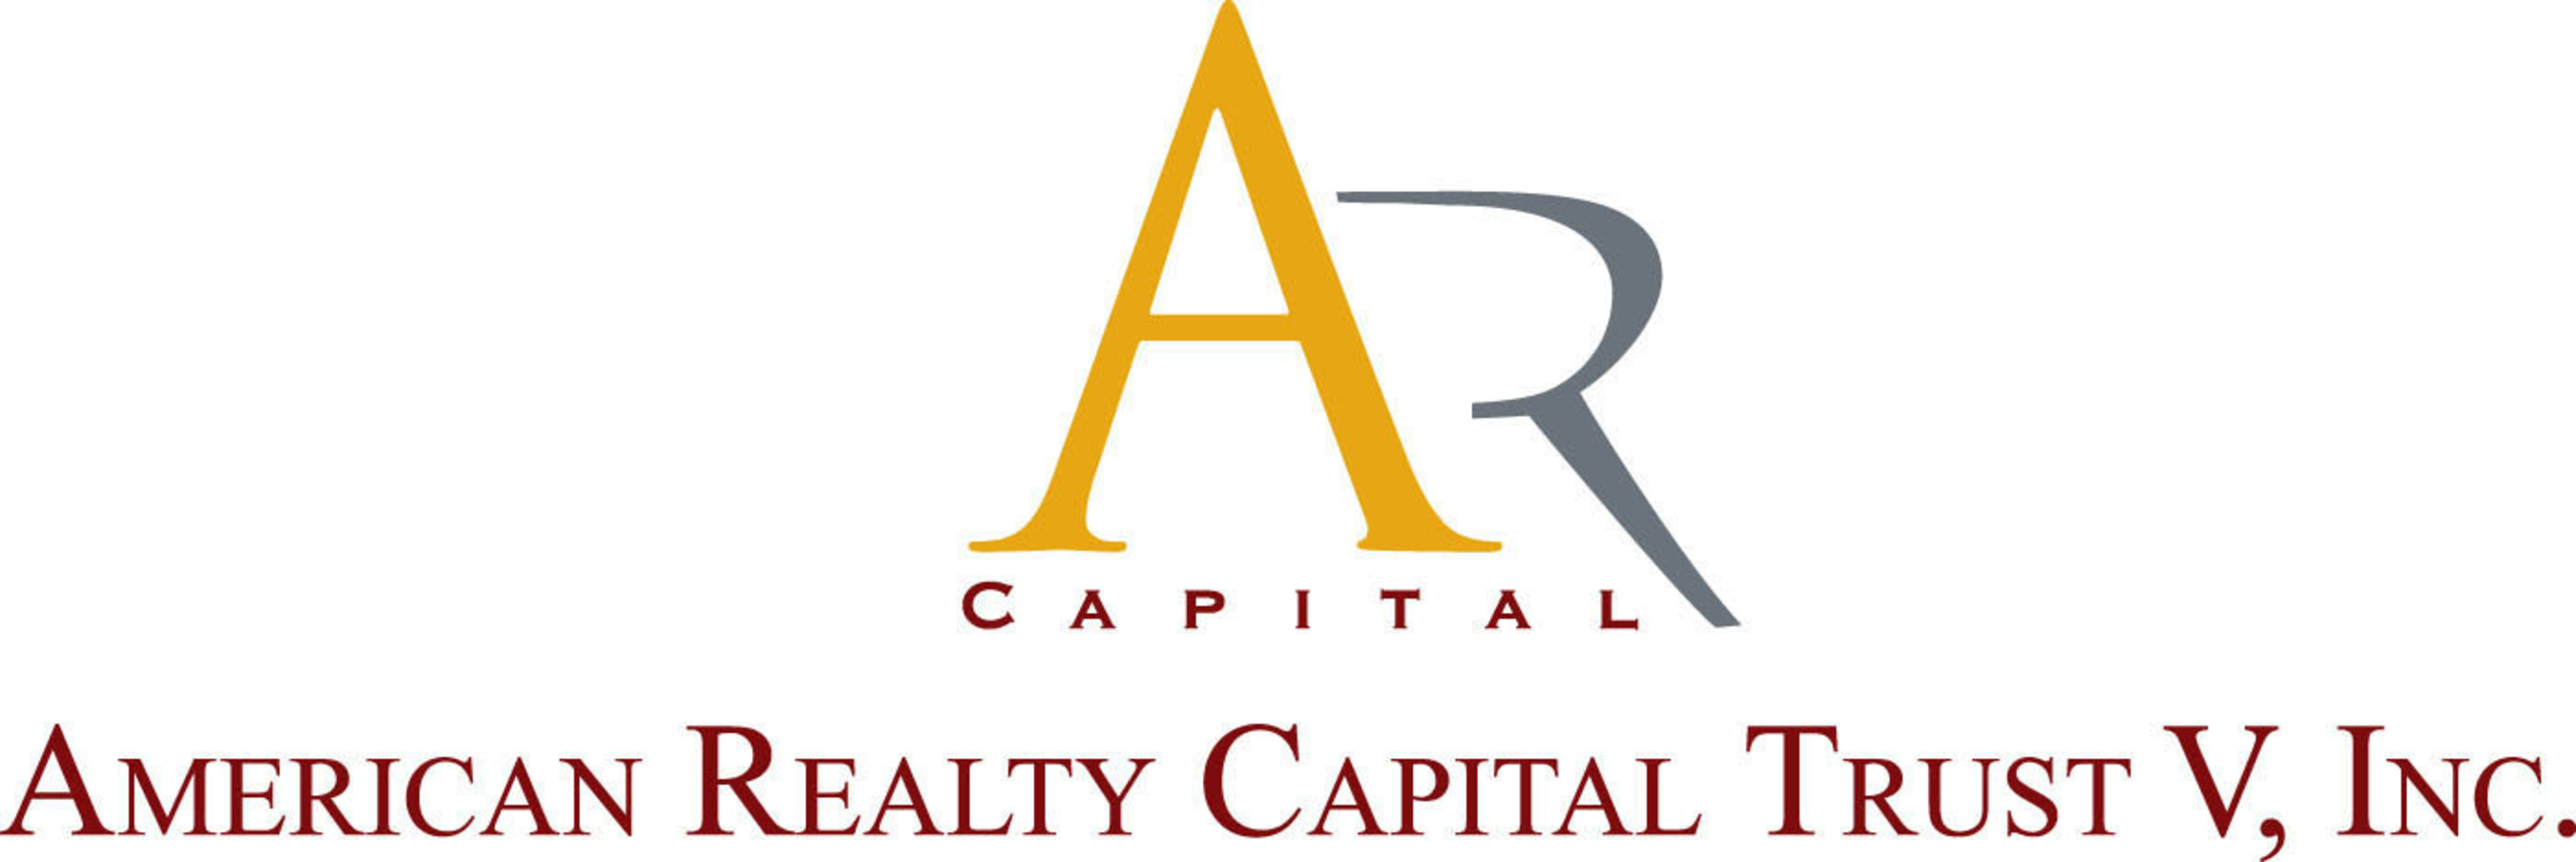 American Realty Capital Trust V, Inc.